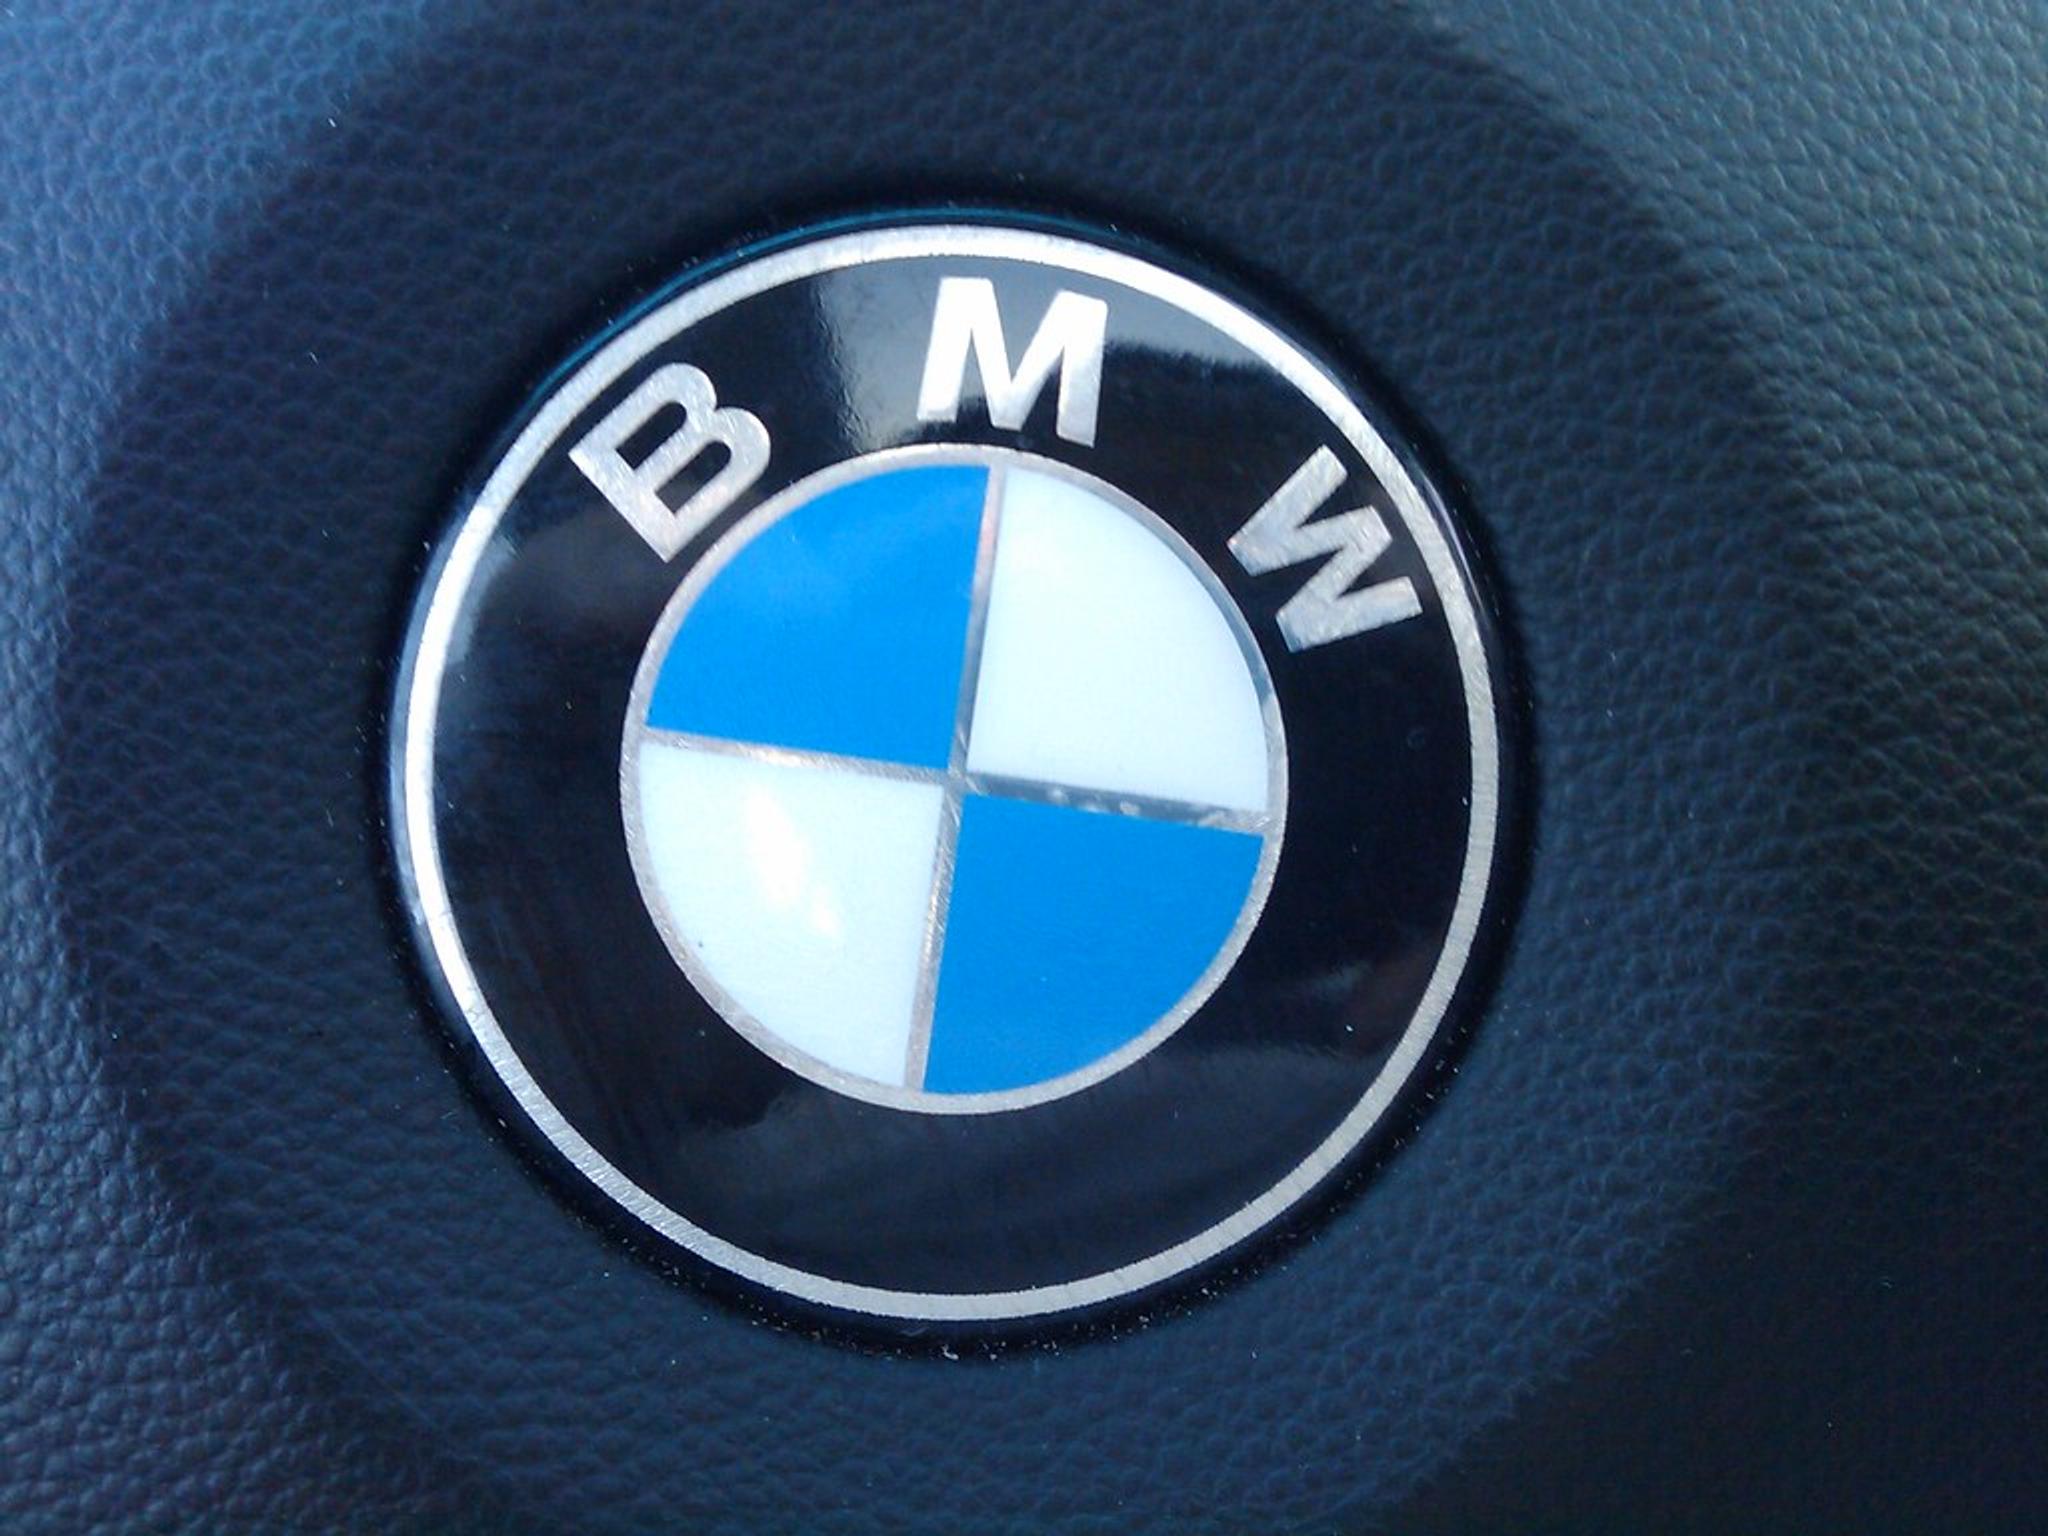 BMW badging on a steering wheel